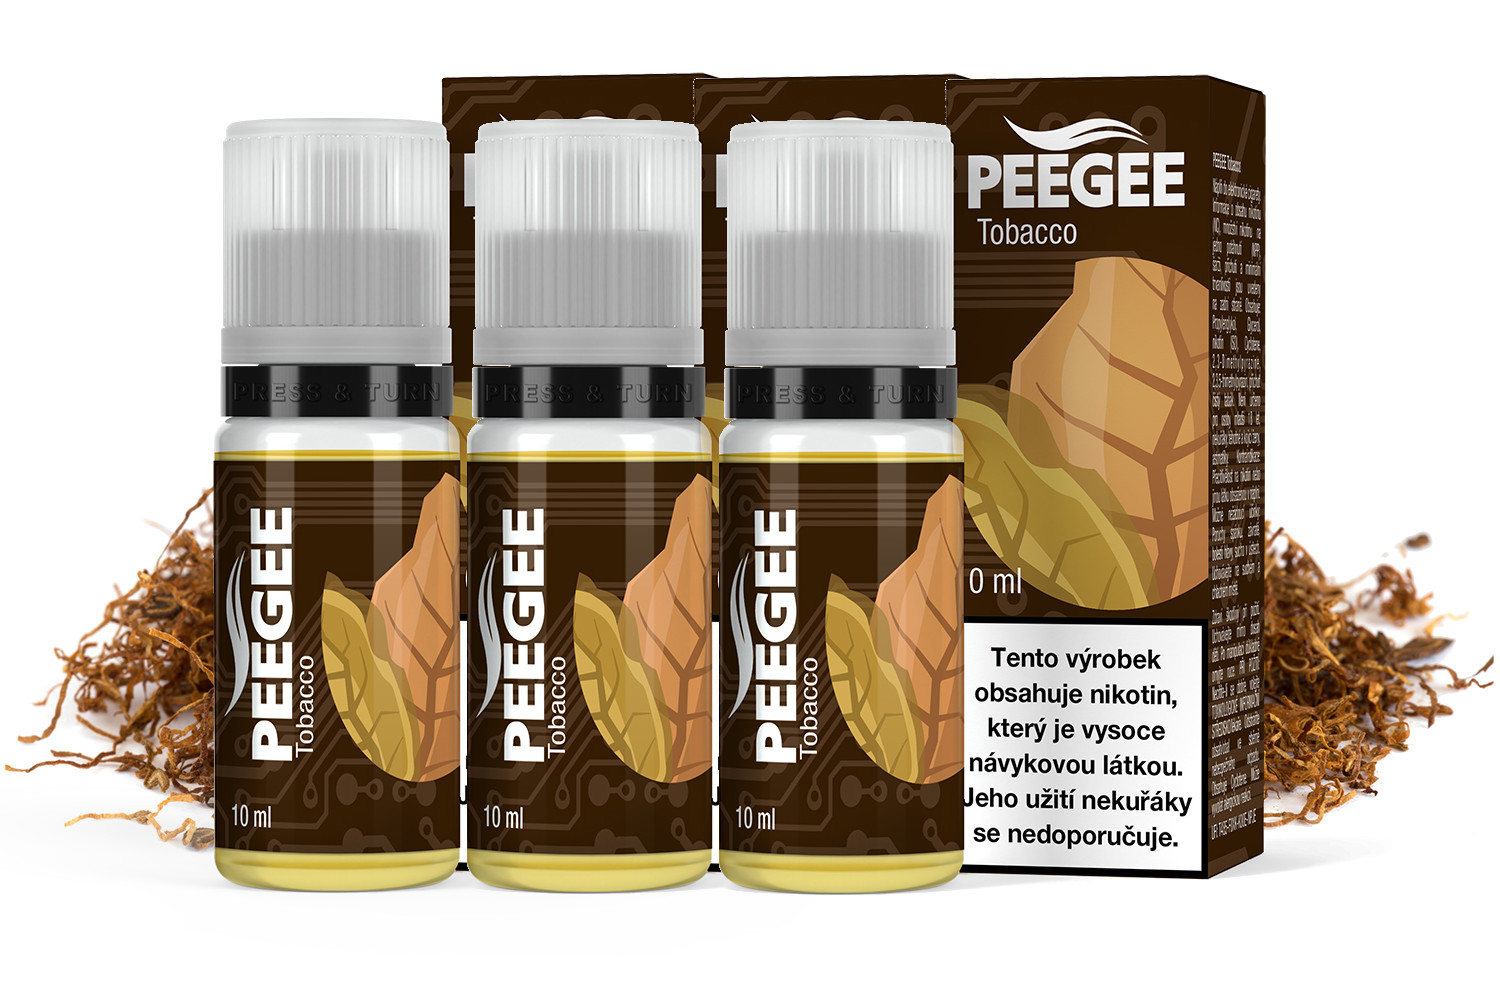 PEEGEE - Čistý tabák (Tobacco) 3x10ml Obsah nikotinu: 12mg